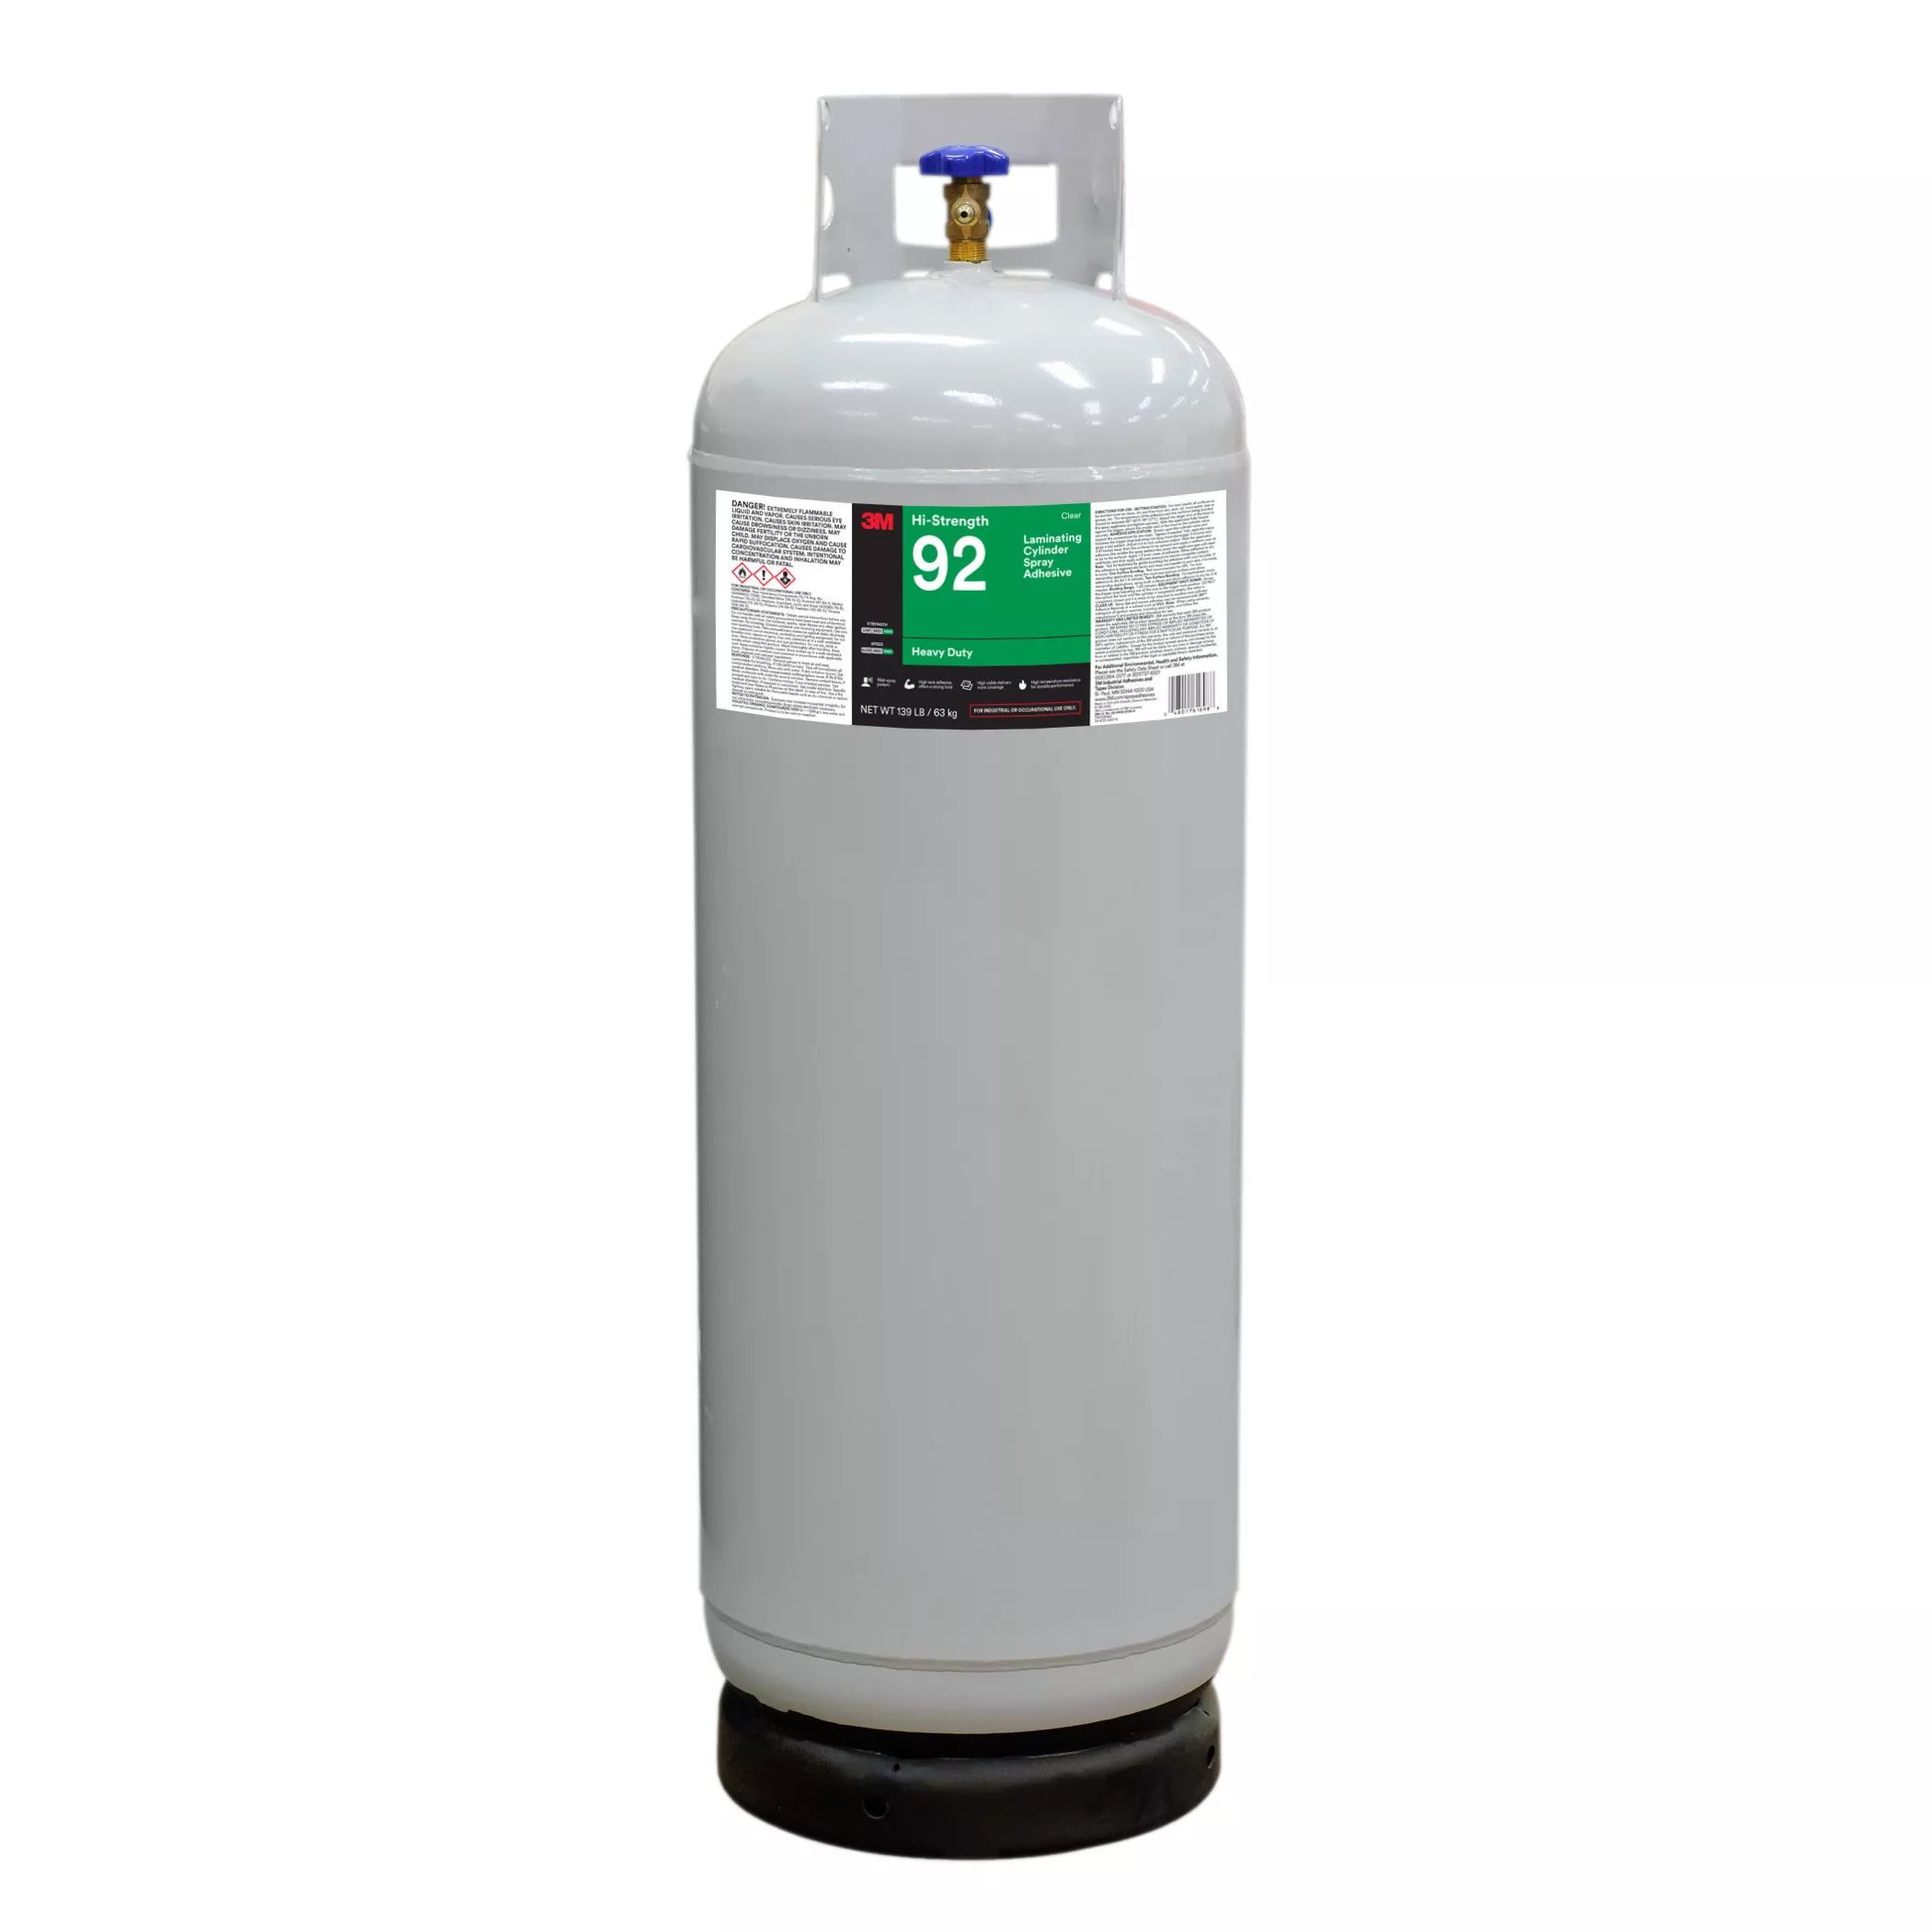 3M™ Hi-Strength Laminating 92, Cylinder Spray Adhesive, Clear,
Intermediate (Net Wt 139 lb), 1 Each/Cylinder